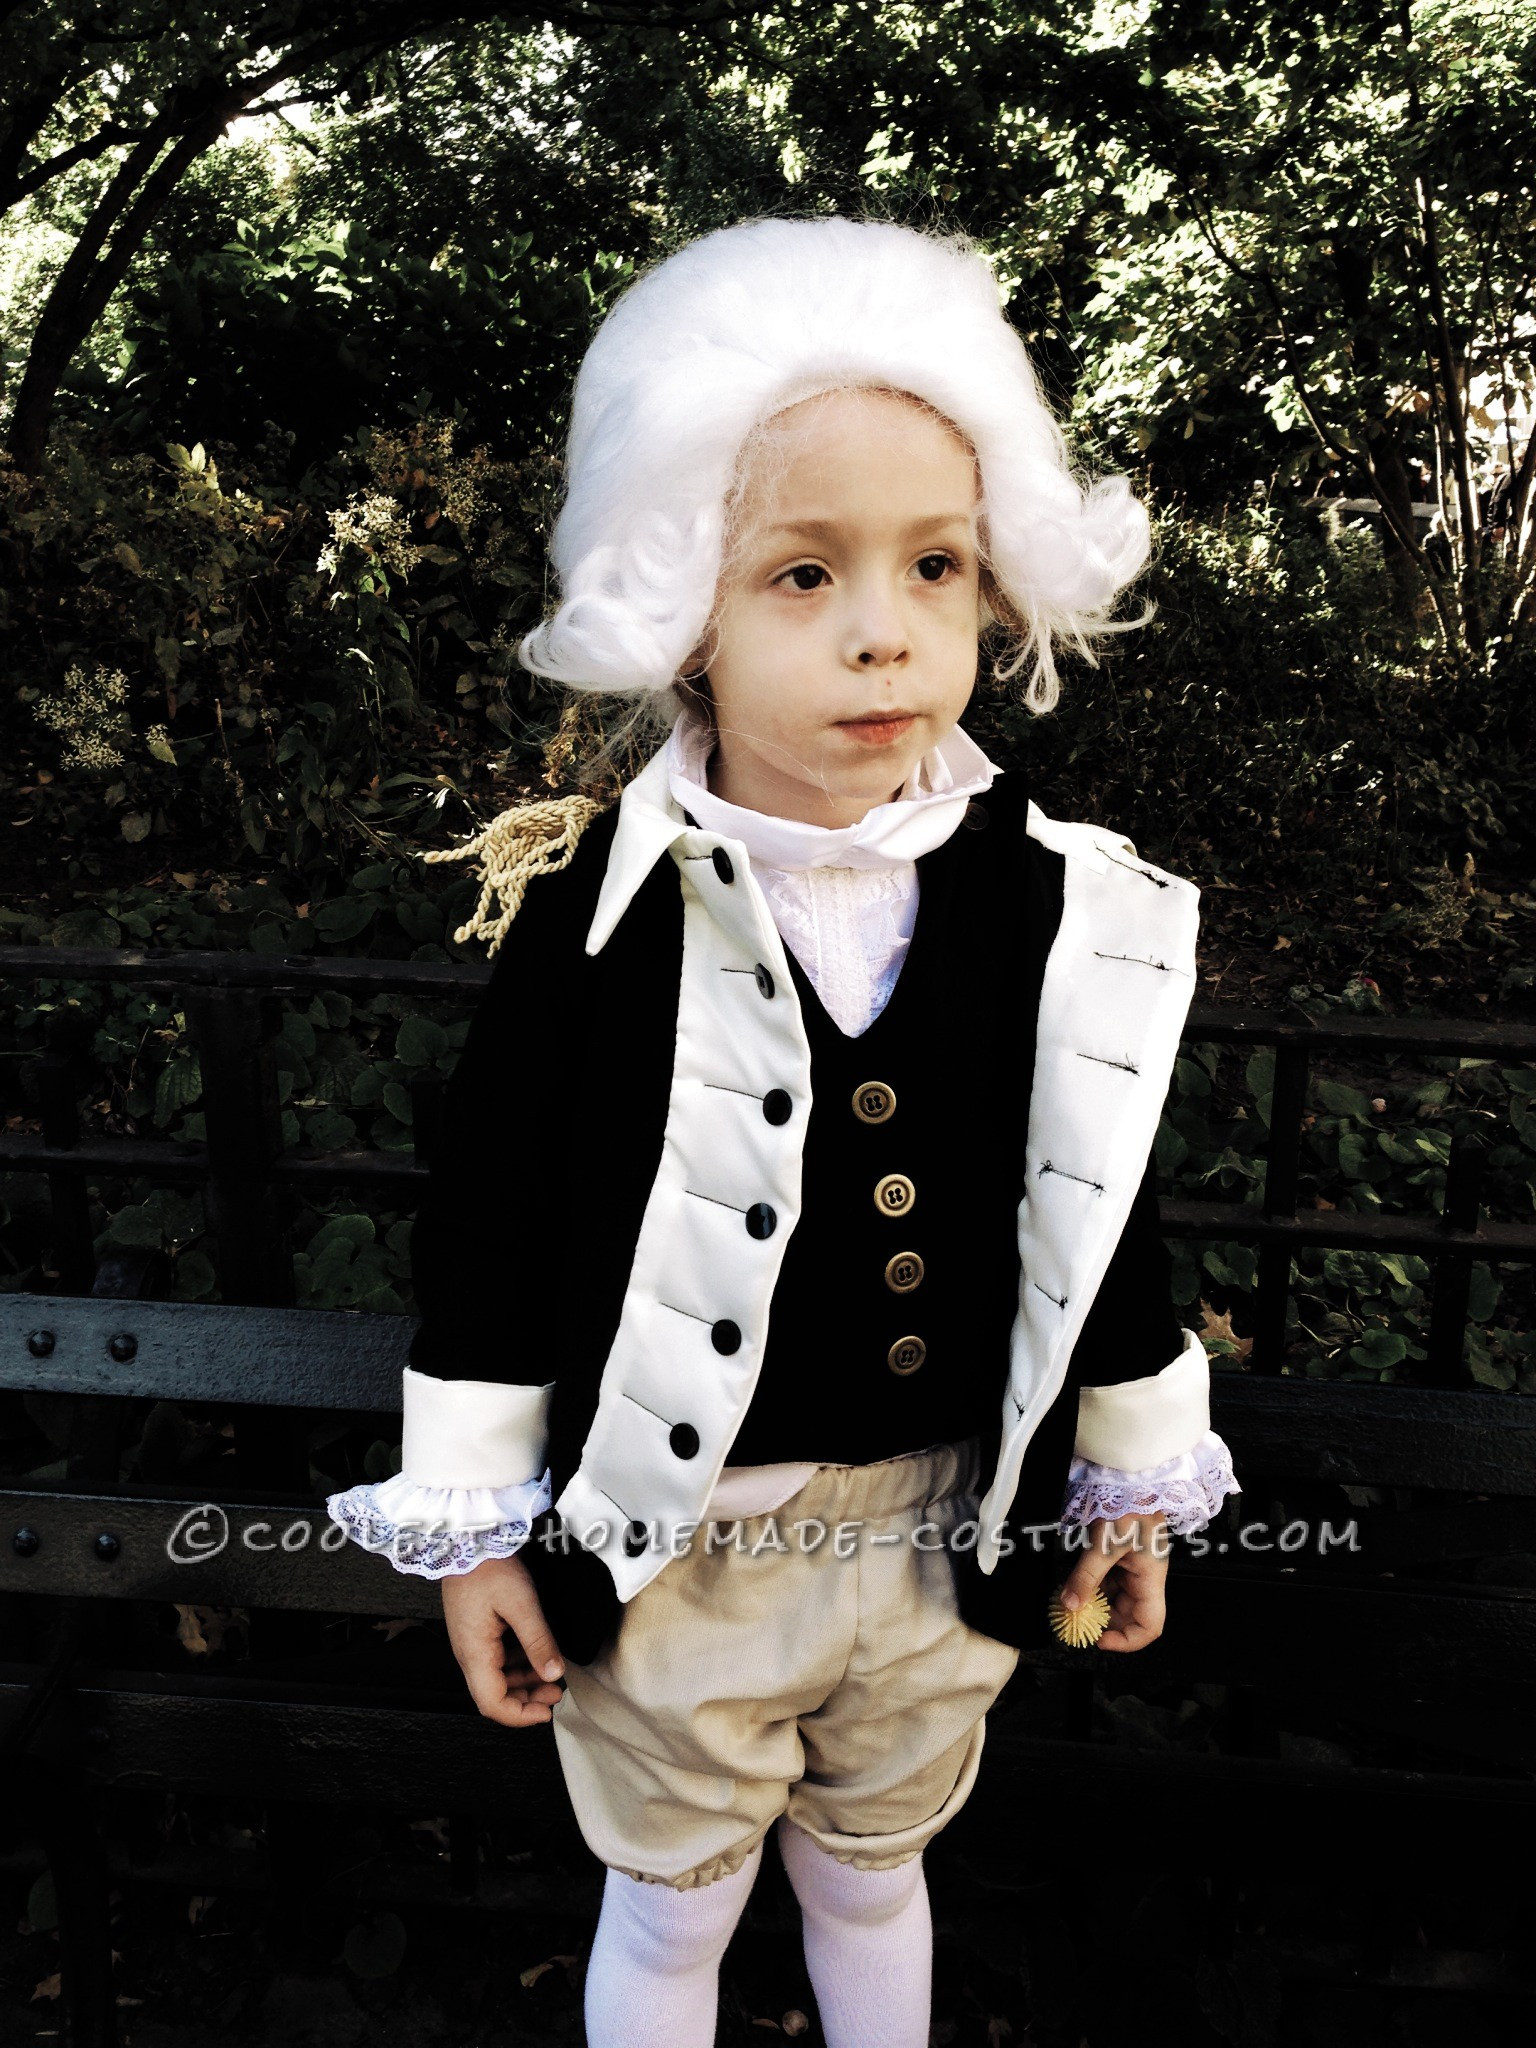 Best ideas about George Washington Costume DIY
. Save or Pin Cute George Washington Costume for a Boy Now.